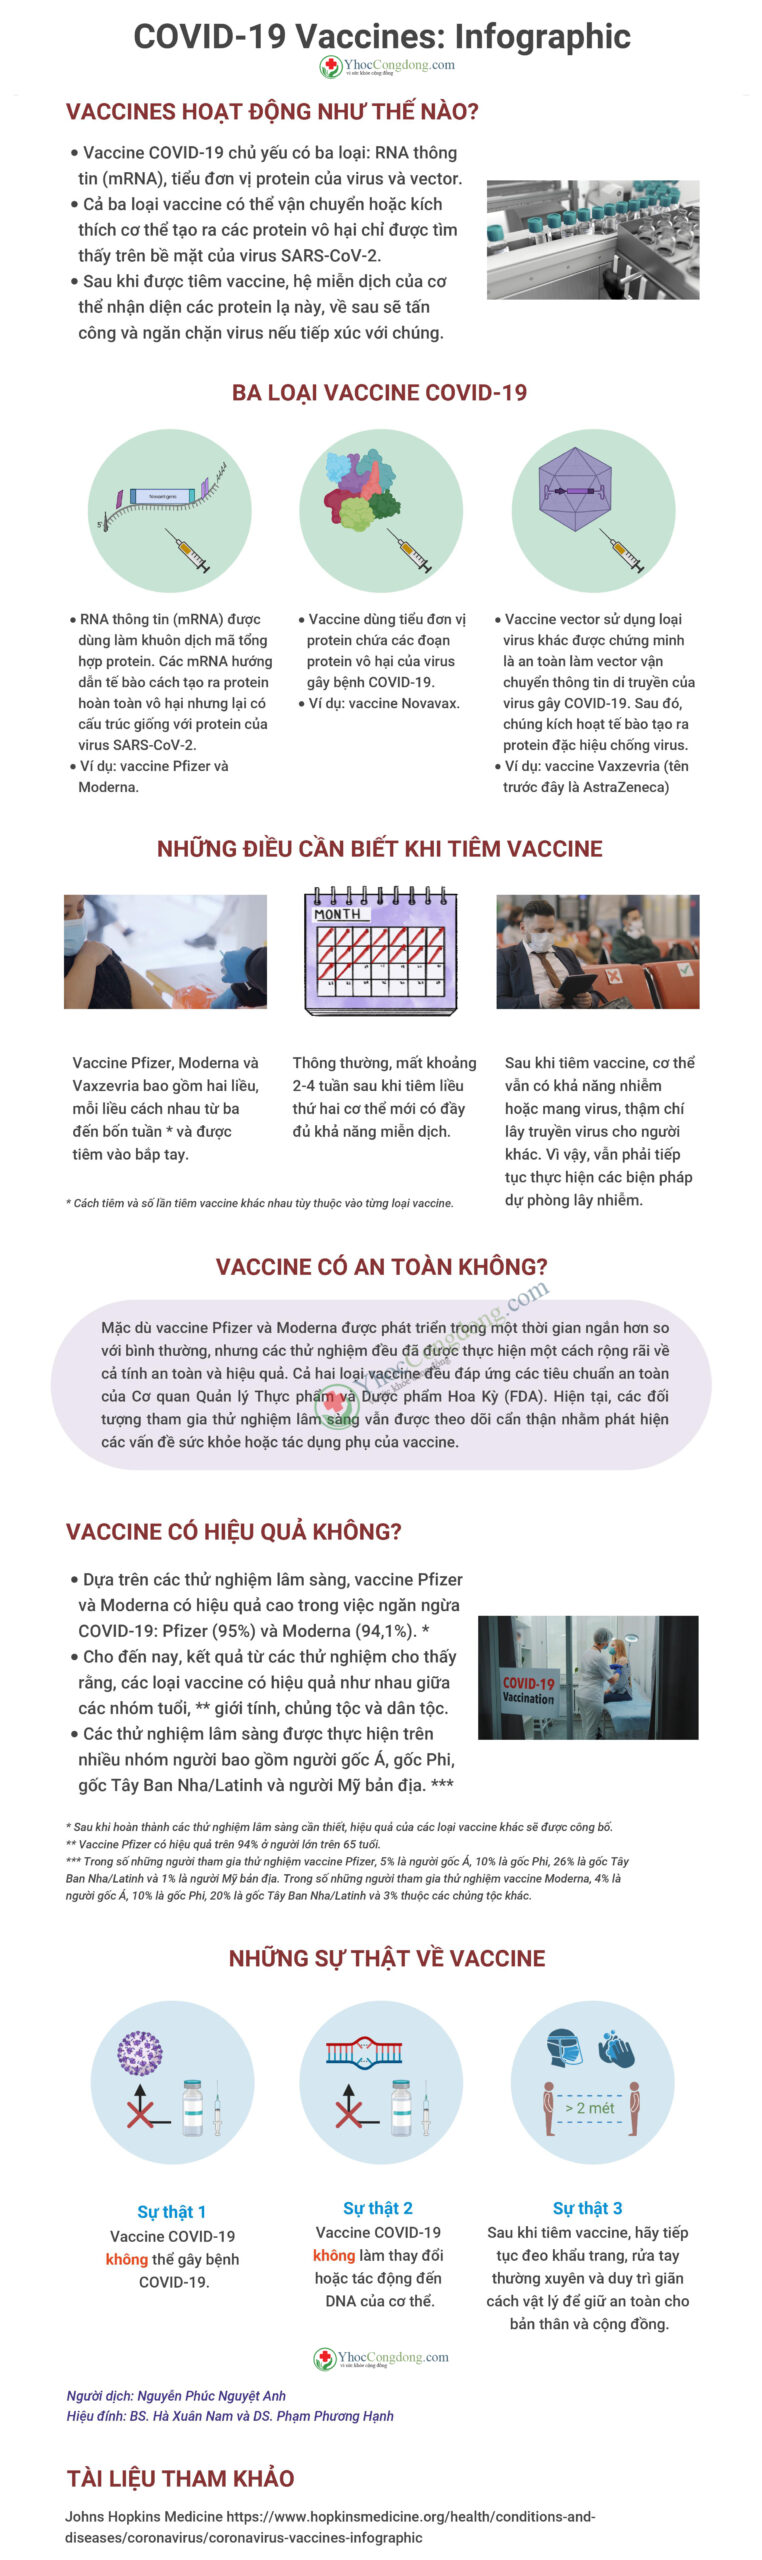 Vaccine-covid-19-infographic